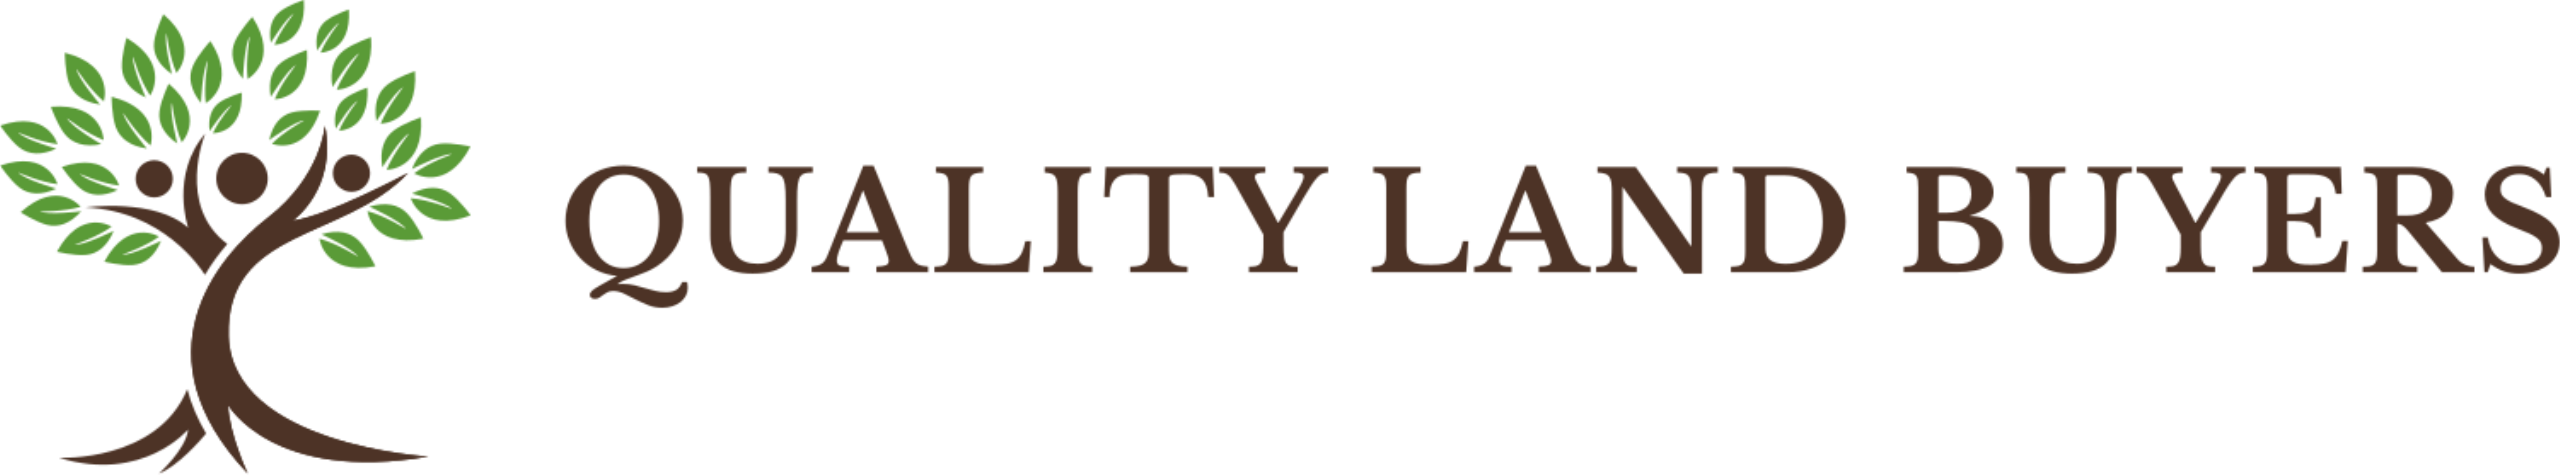 Quality Land Buyers Logo